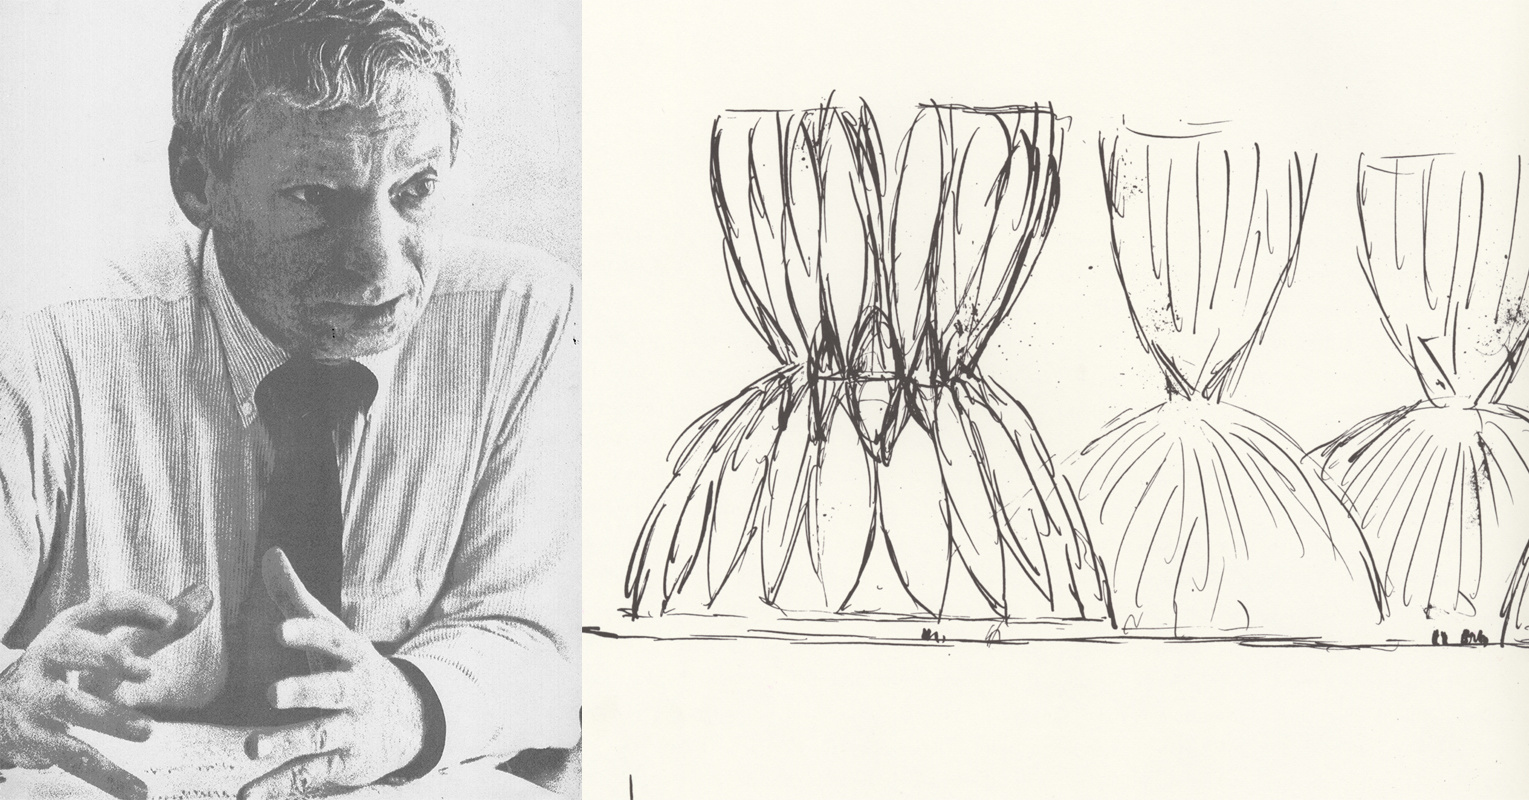 Louis Kahn and his GM Pavillion Sketch